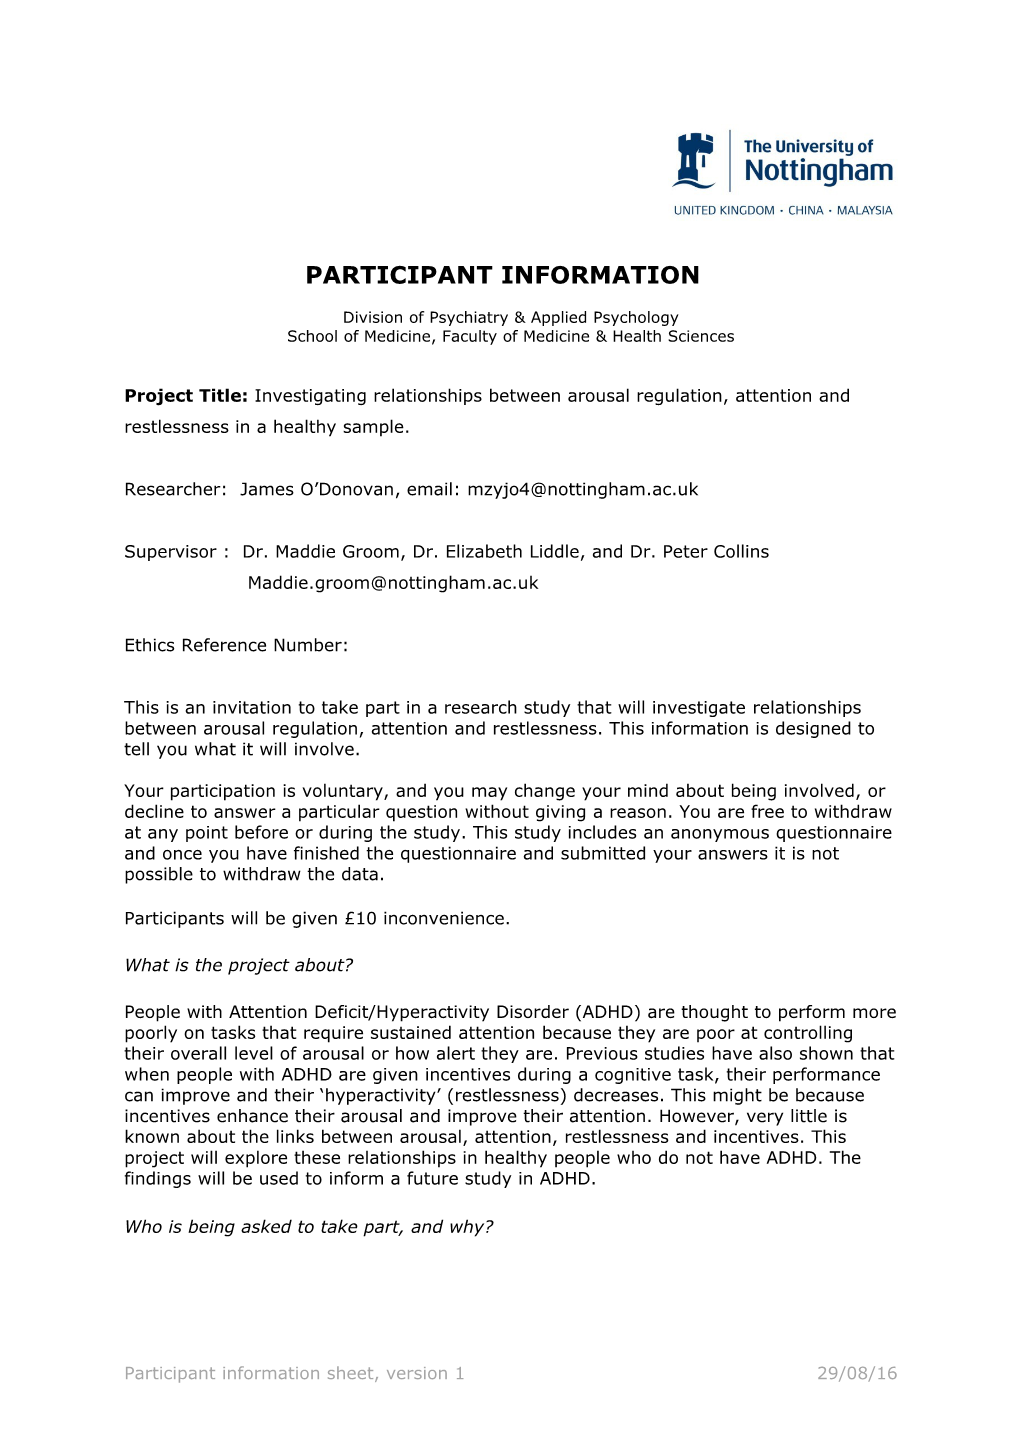 Ethics Review - Participant Information Template 27.04.2016